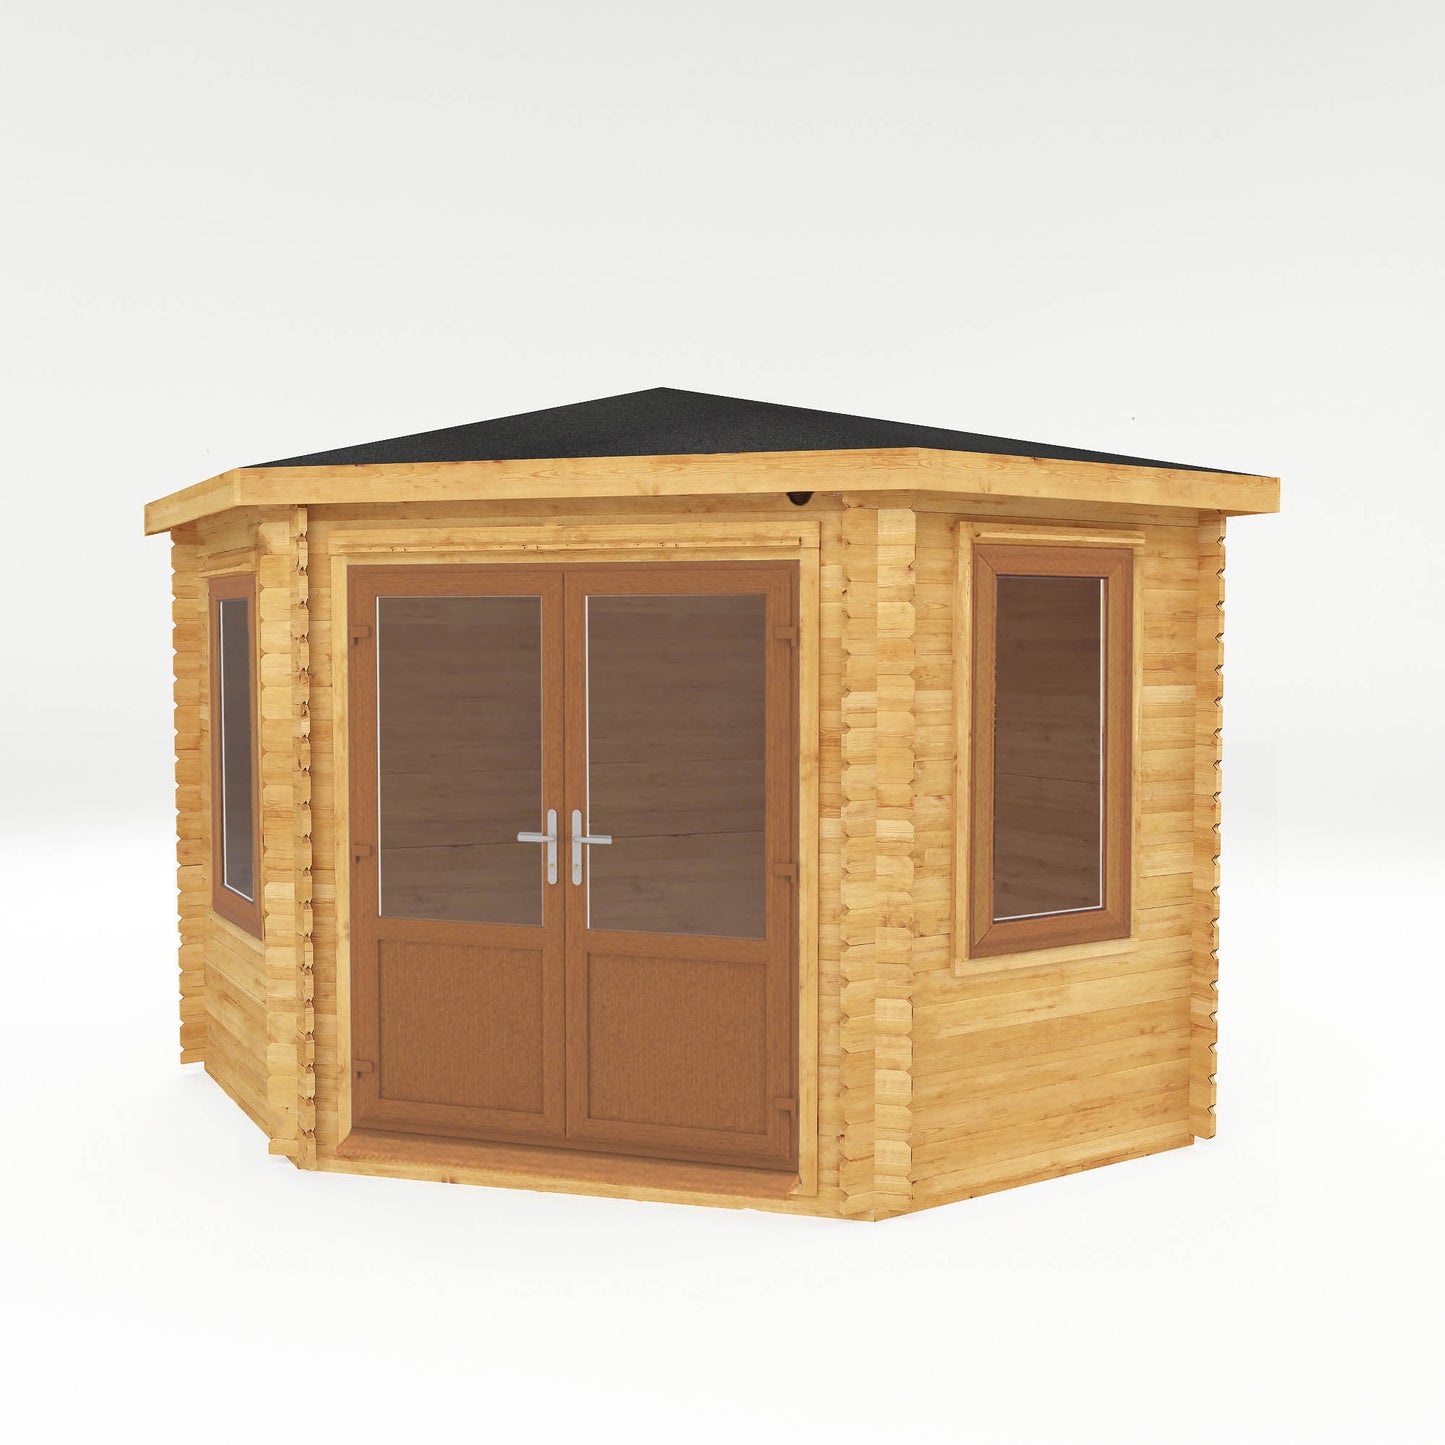 The 3m x 3m Goldcrest Corner Log Cabin with Oak UPVC